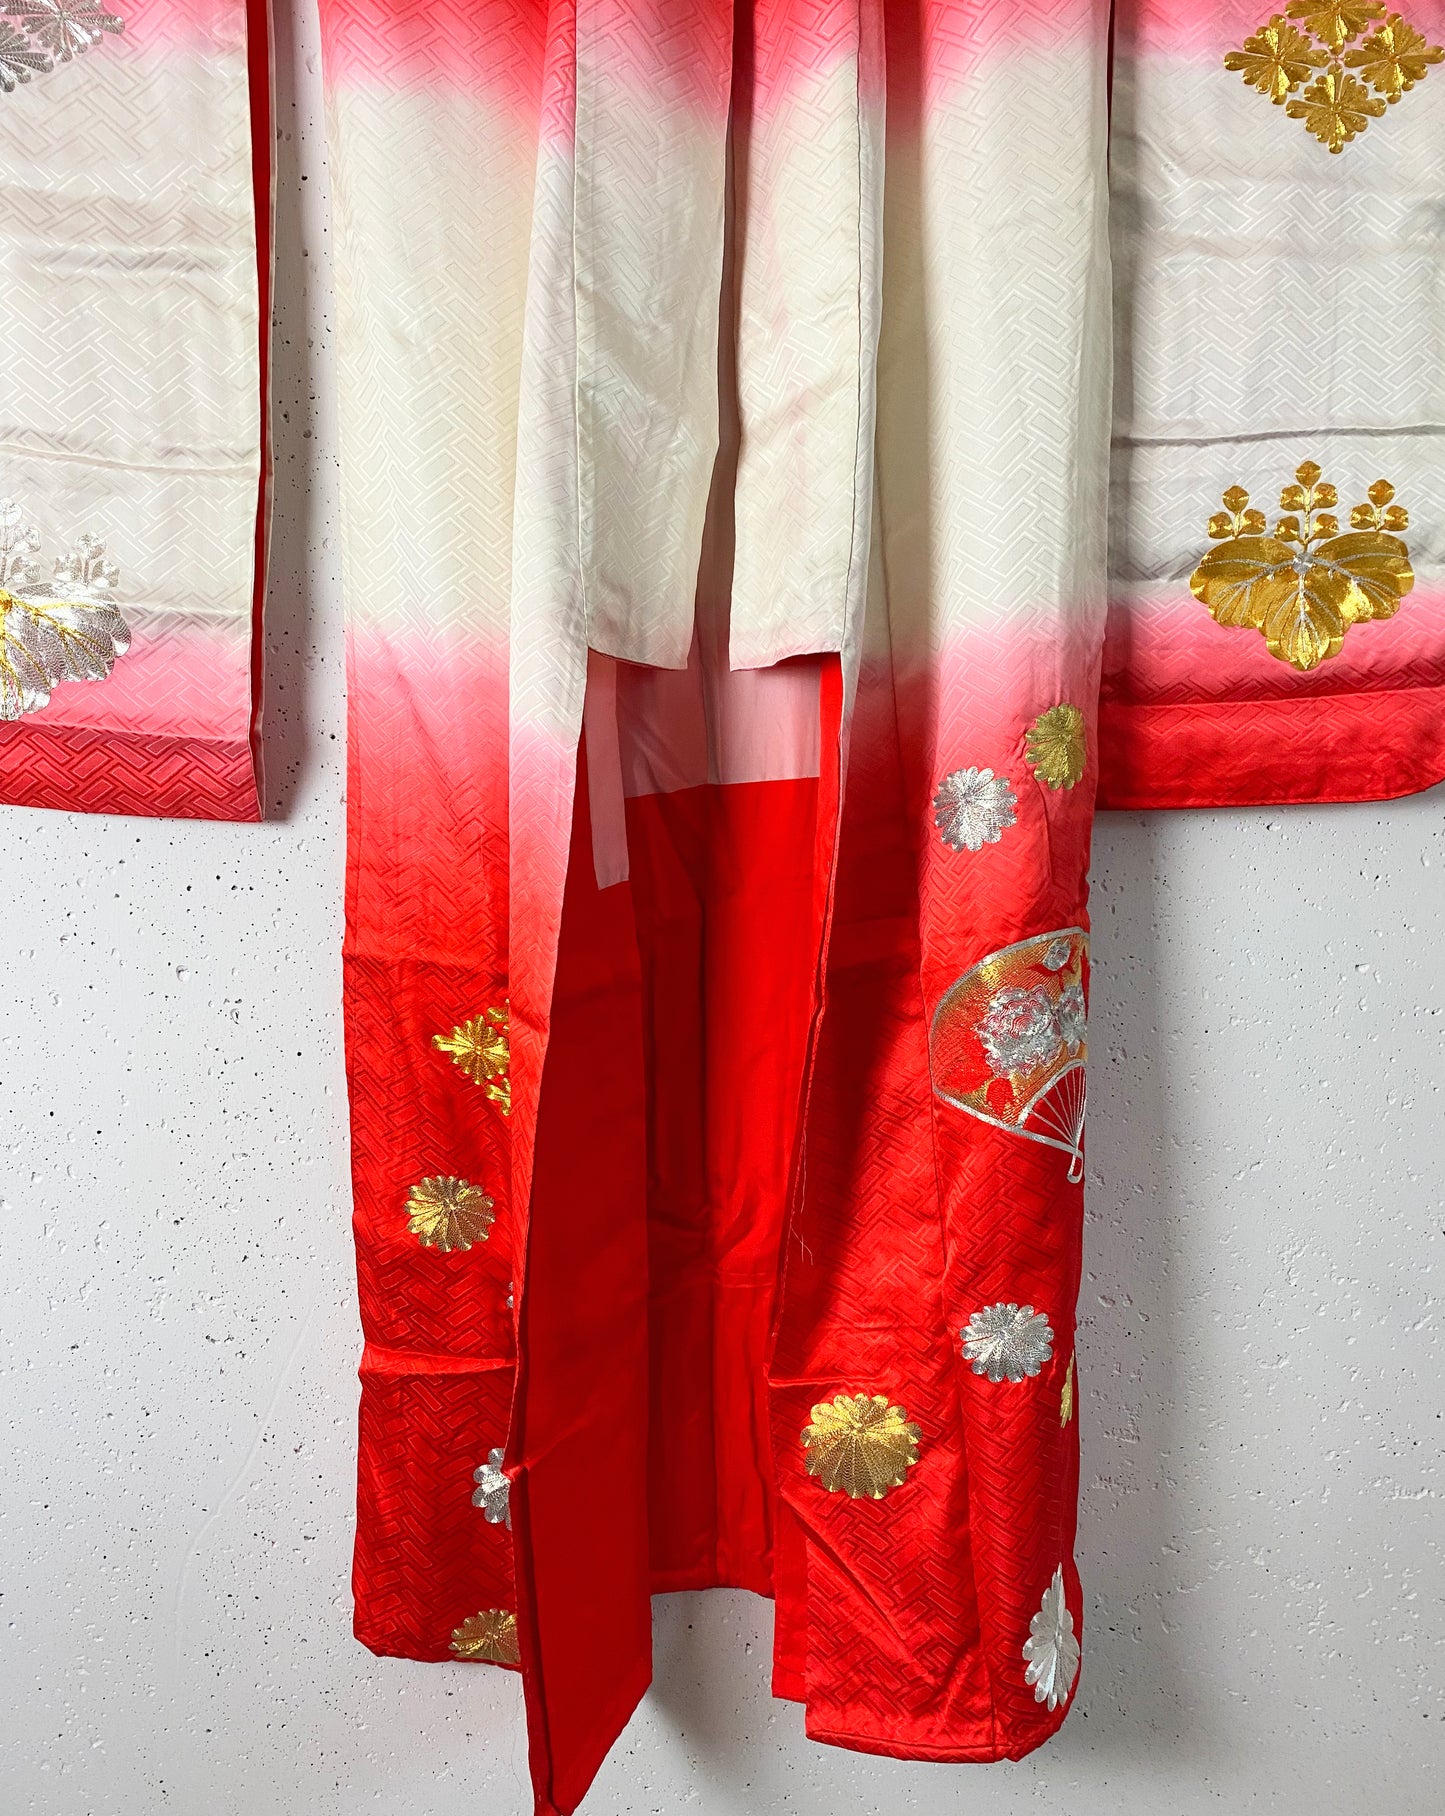 UCHIKAKE/ women's bridal robe with trailing skirts worn over a kimono